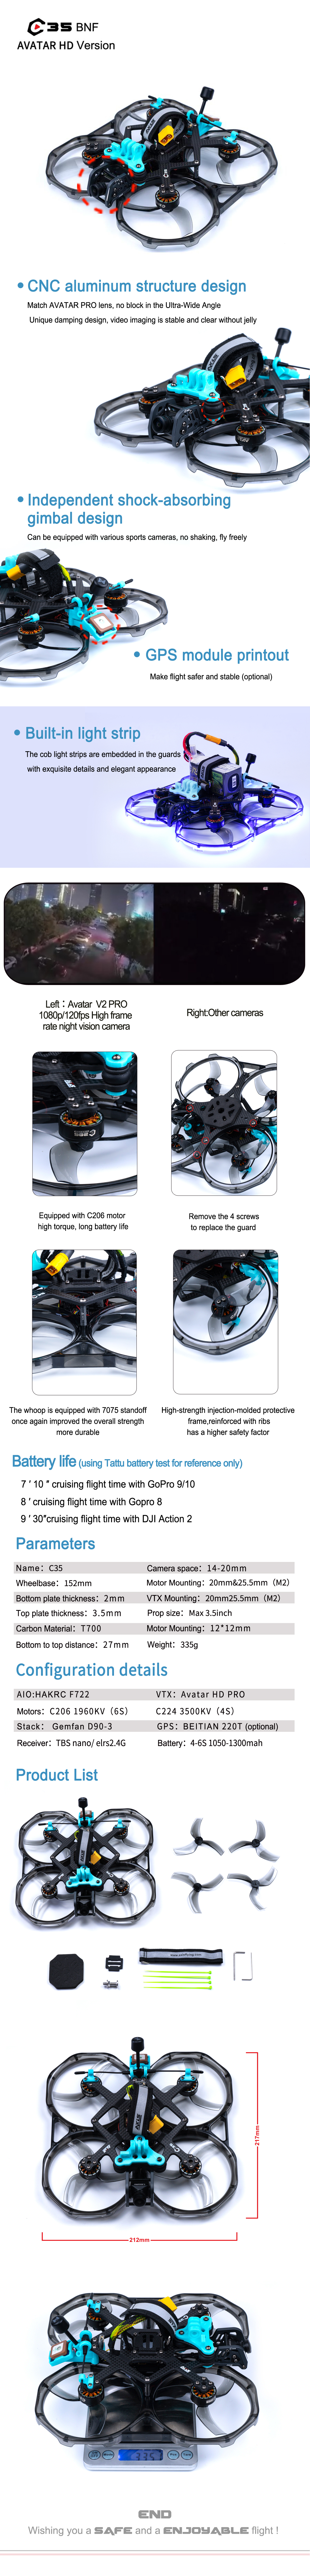 Axisflying cineon C35 V2 / 3.5 inch Walksnail Avatar HD Pro Kit 32G fpv drone - 4S/6S C35 V2 BNF drone Walksnail Avatar HD PRO cinematic drone,cinewhoop drone,longrange drone,freestyle drone,fpv drone,fpv quads,3.5" cinematic drone,3.5" cinematic quads,3.5" cinewhoop quads,3"cinewhoop quads,3"cinematic quads,the same as dji quads,2.5" whoop,2.5"cinewhoop,2.5"indoor drone,2.5" frame,sub250g,sub250gfpv,2"cinewhoop,2"indoor drone,DJI O3,DJI O3 BNF,DJI O3 DRONE